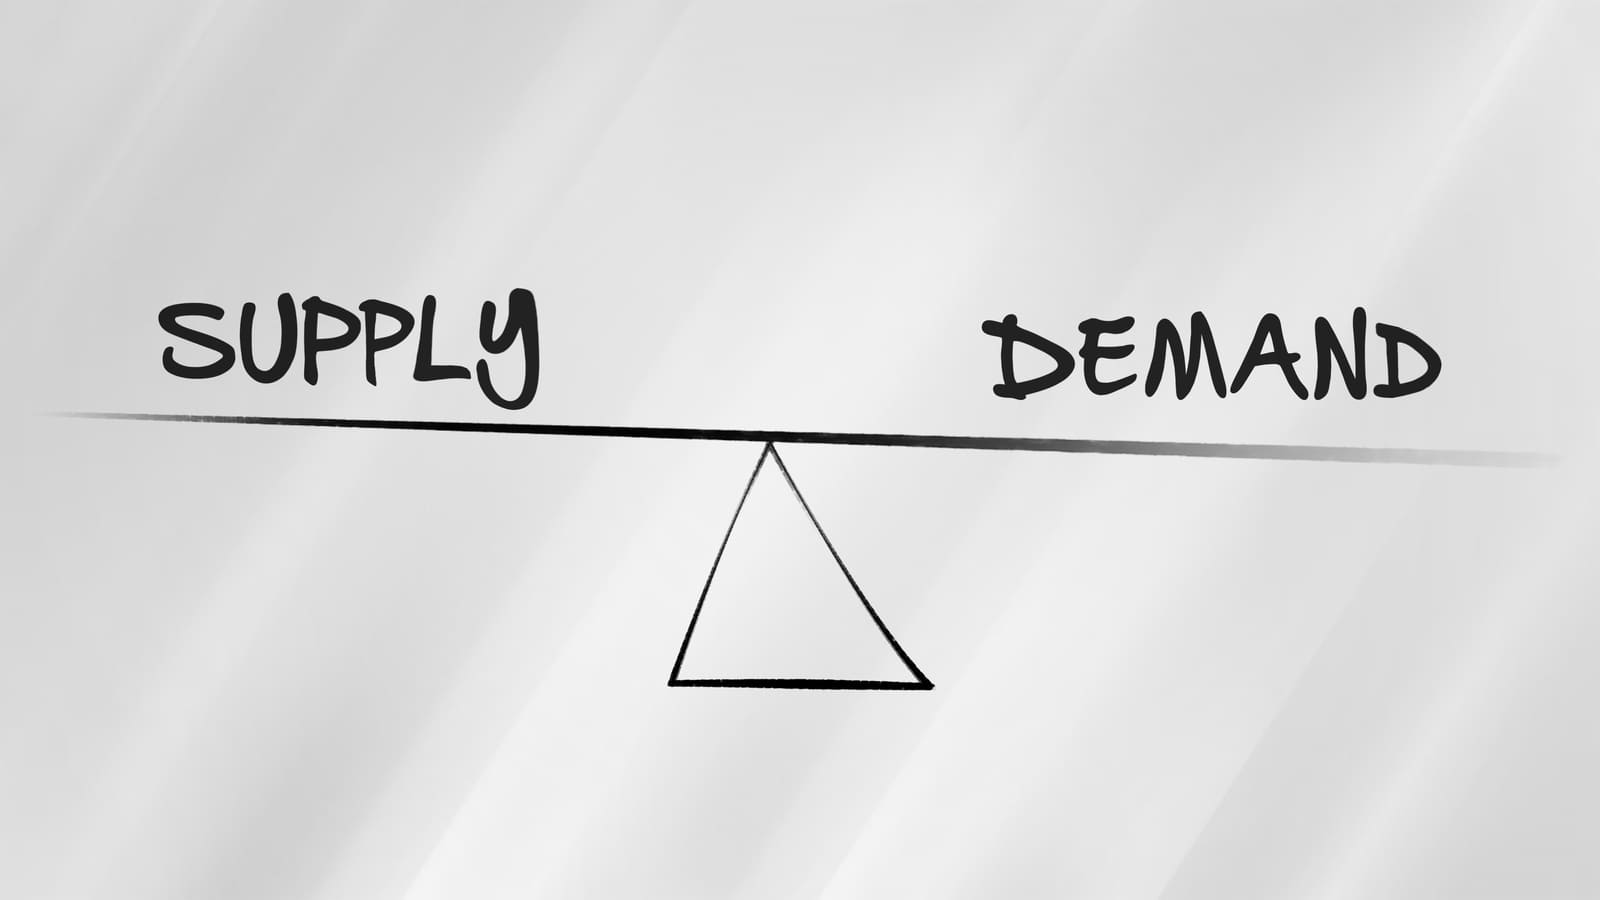 Supply vs demand